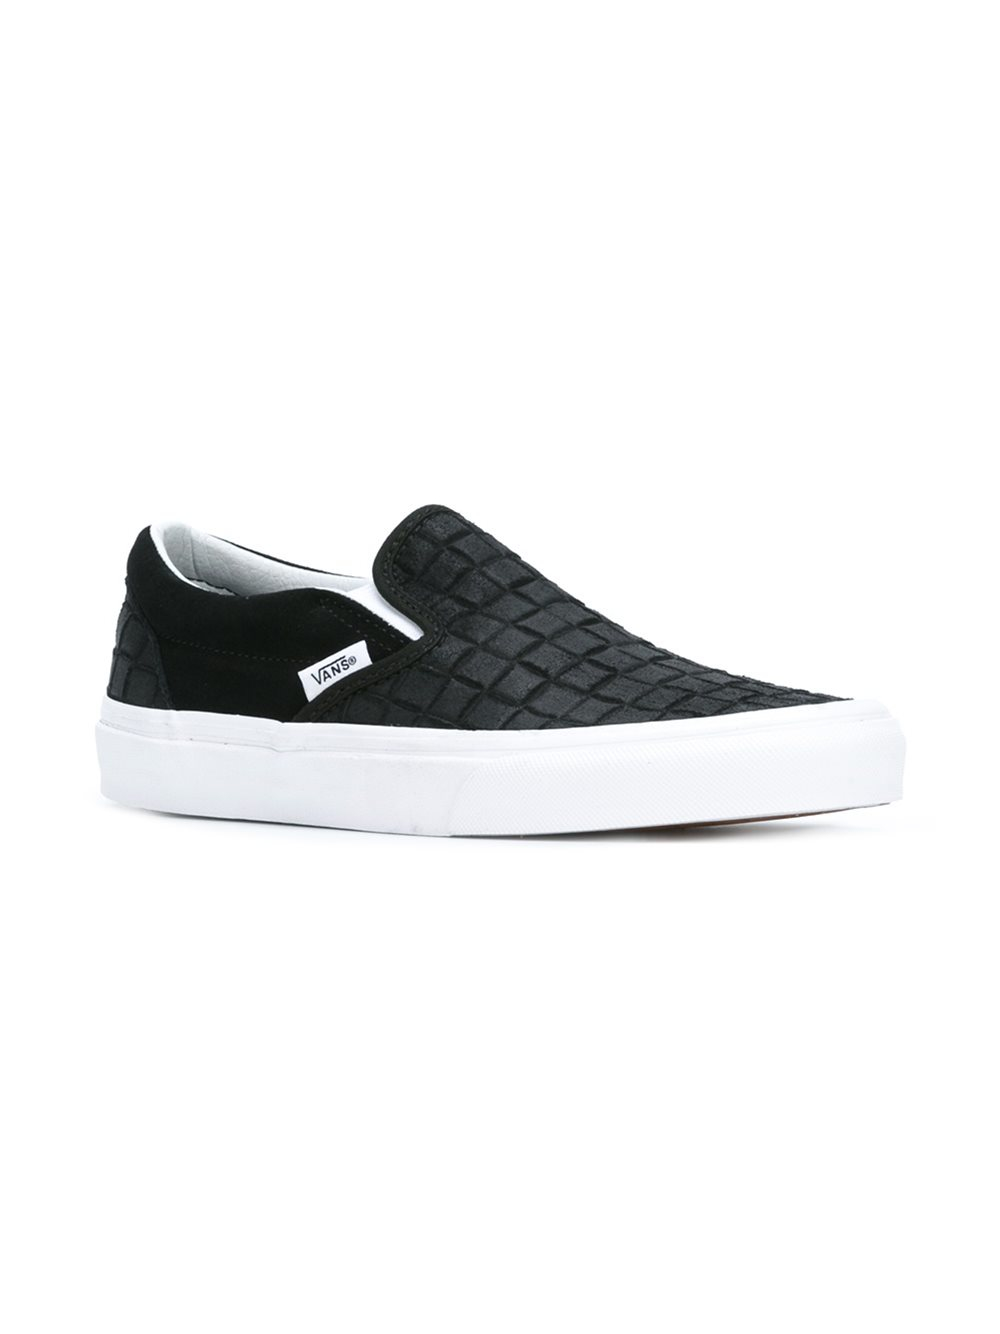 Lyst - Vans Square Embossed Slip-on Sneakers in Black for Men